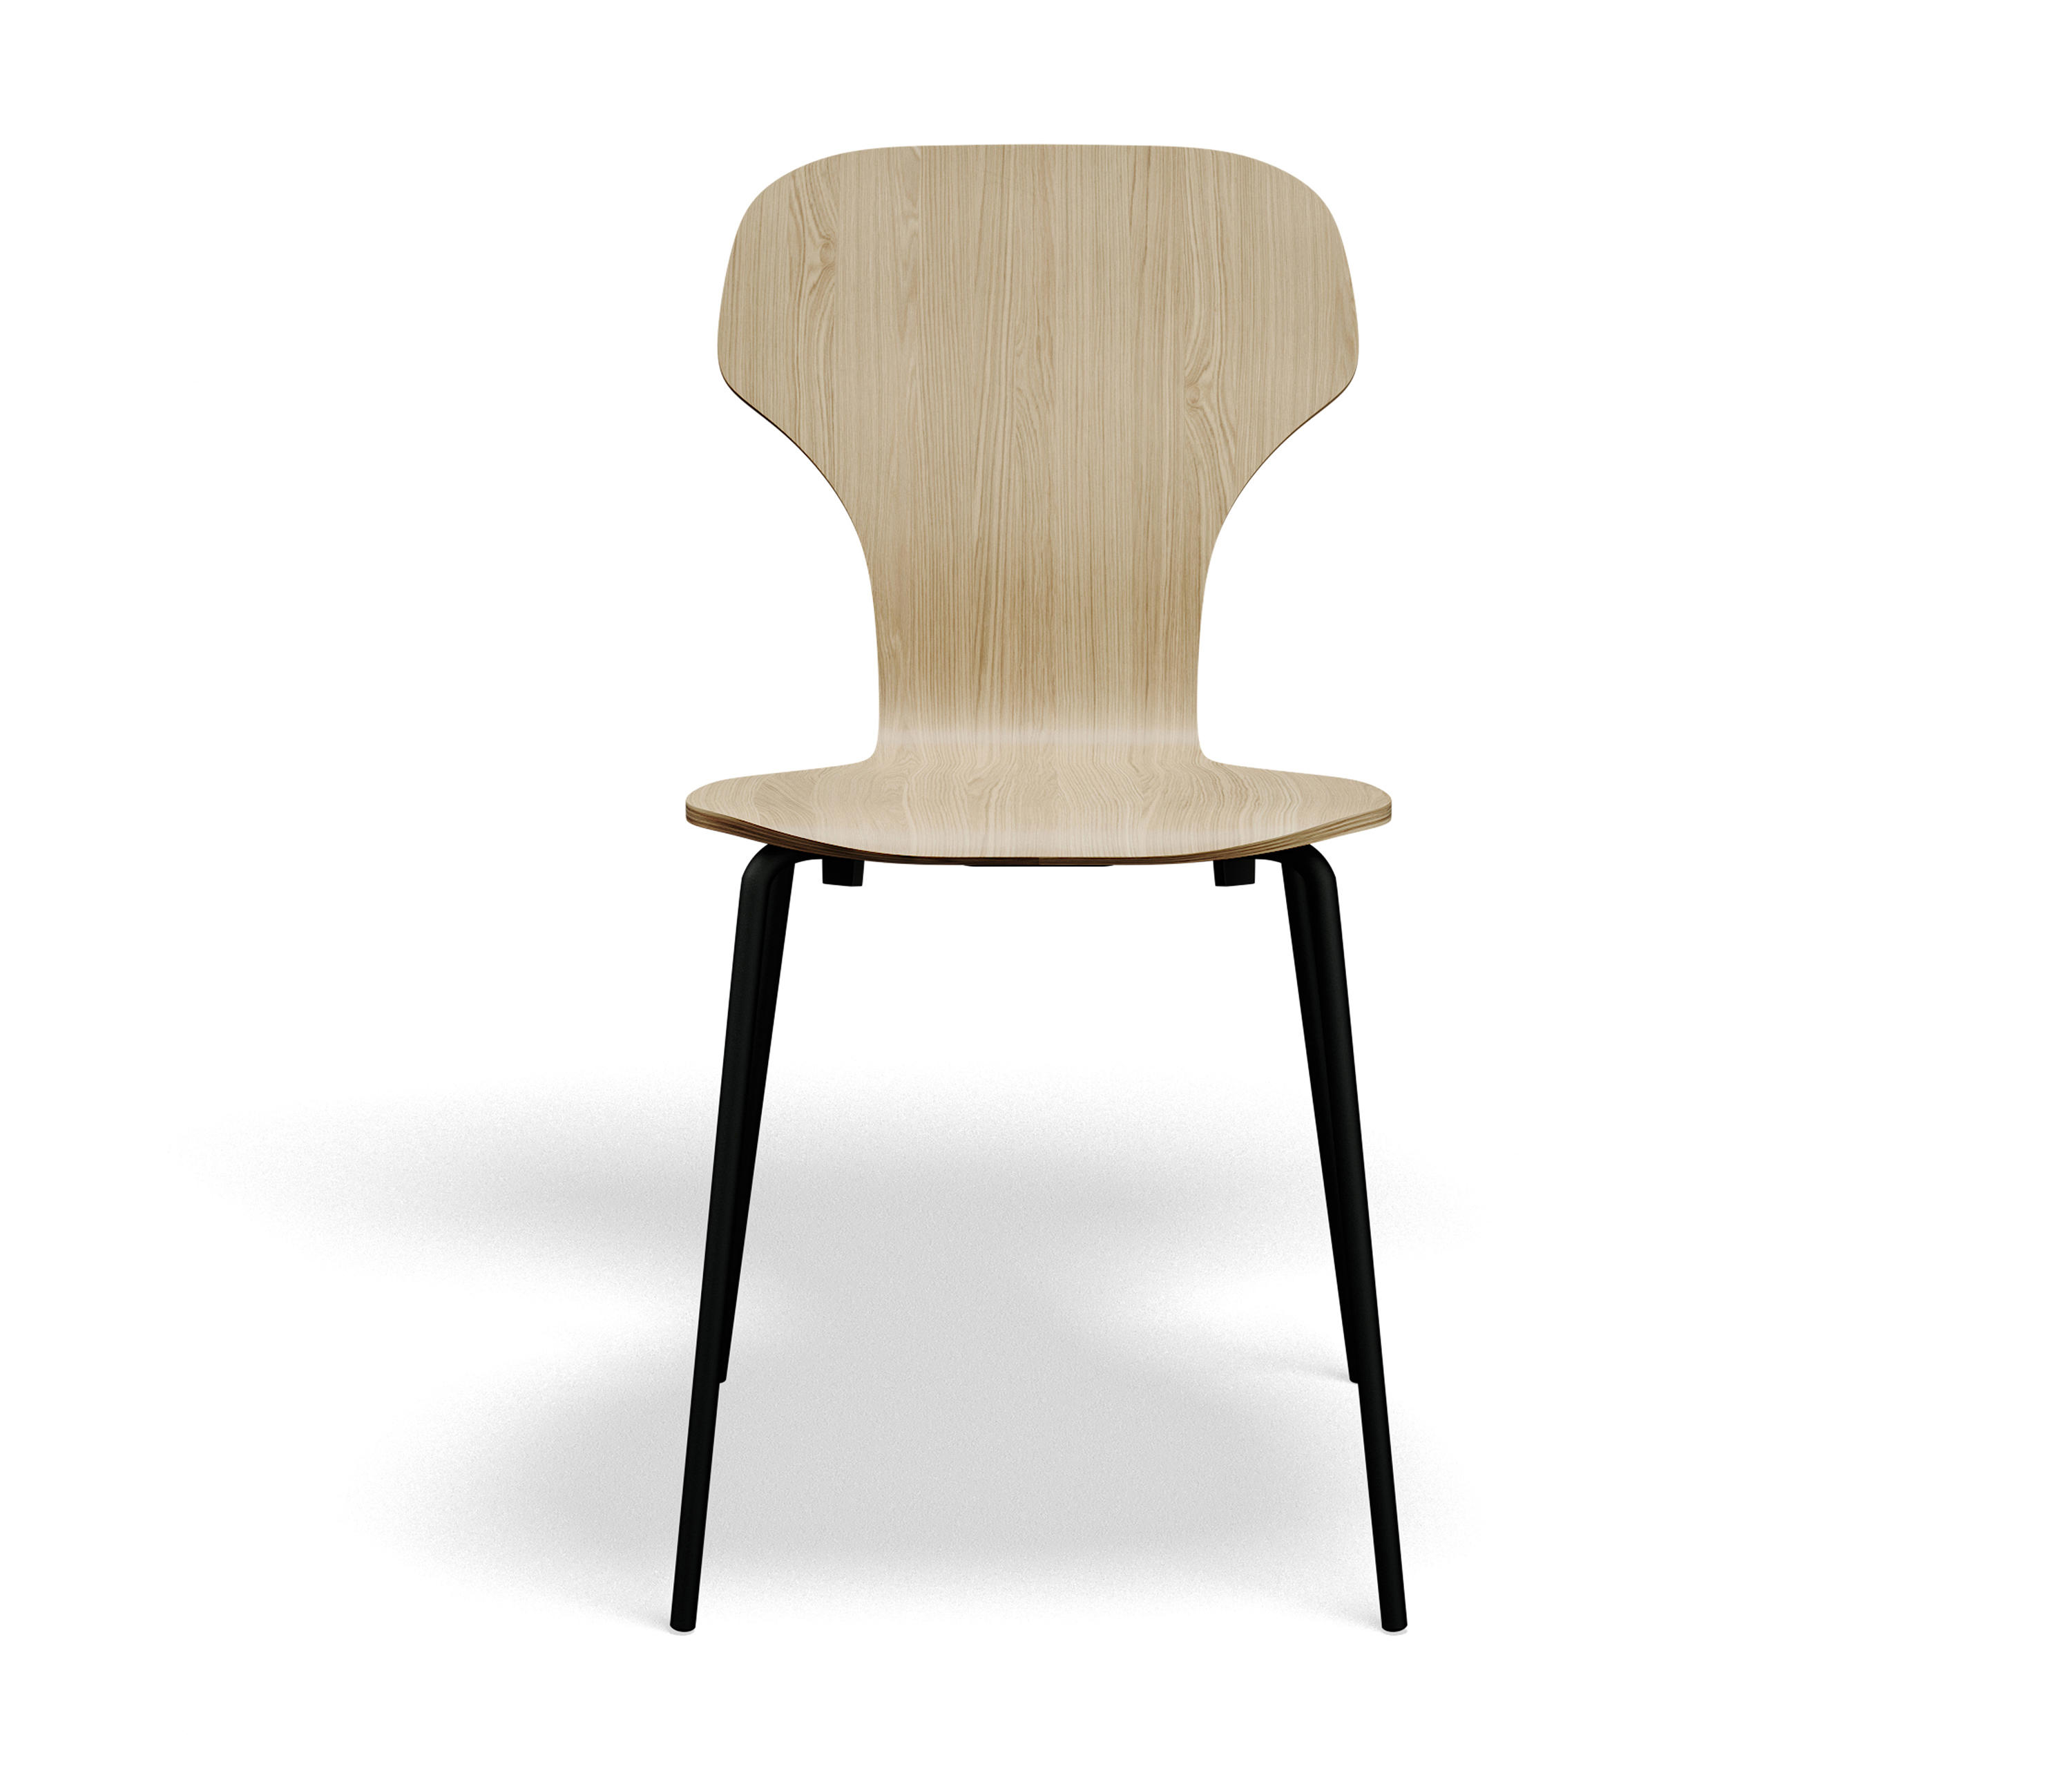 classic chair design